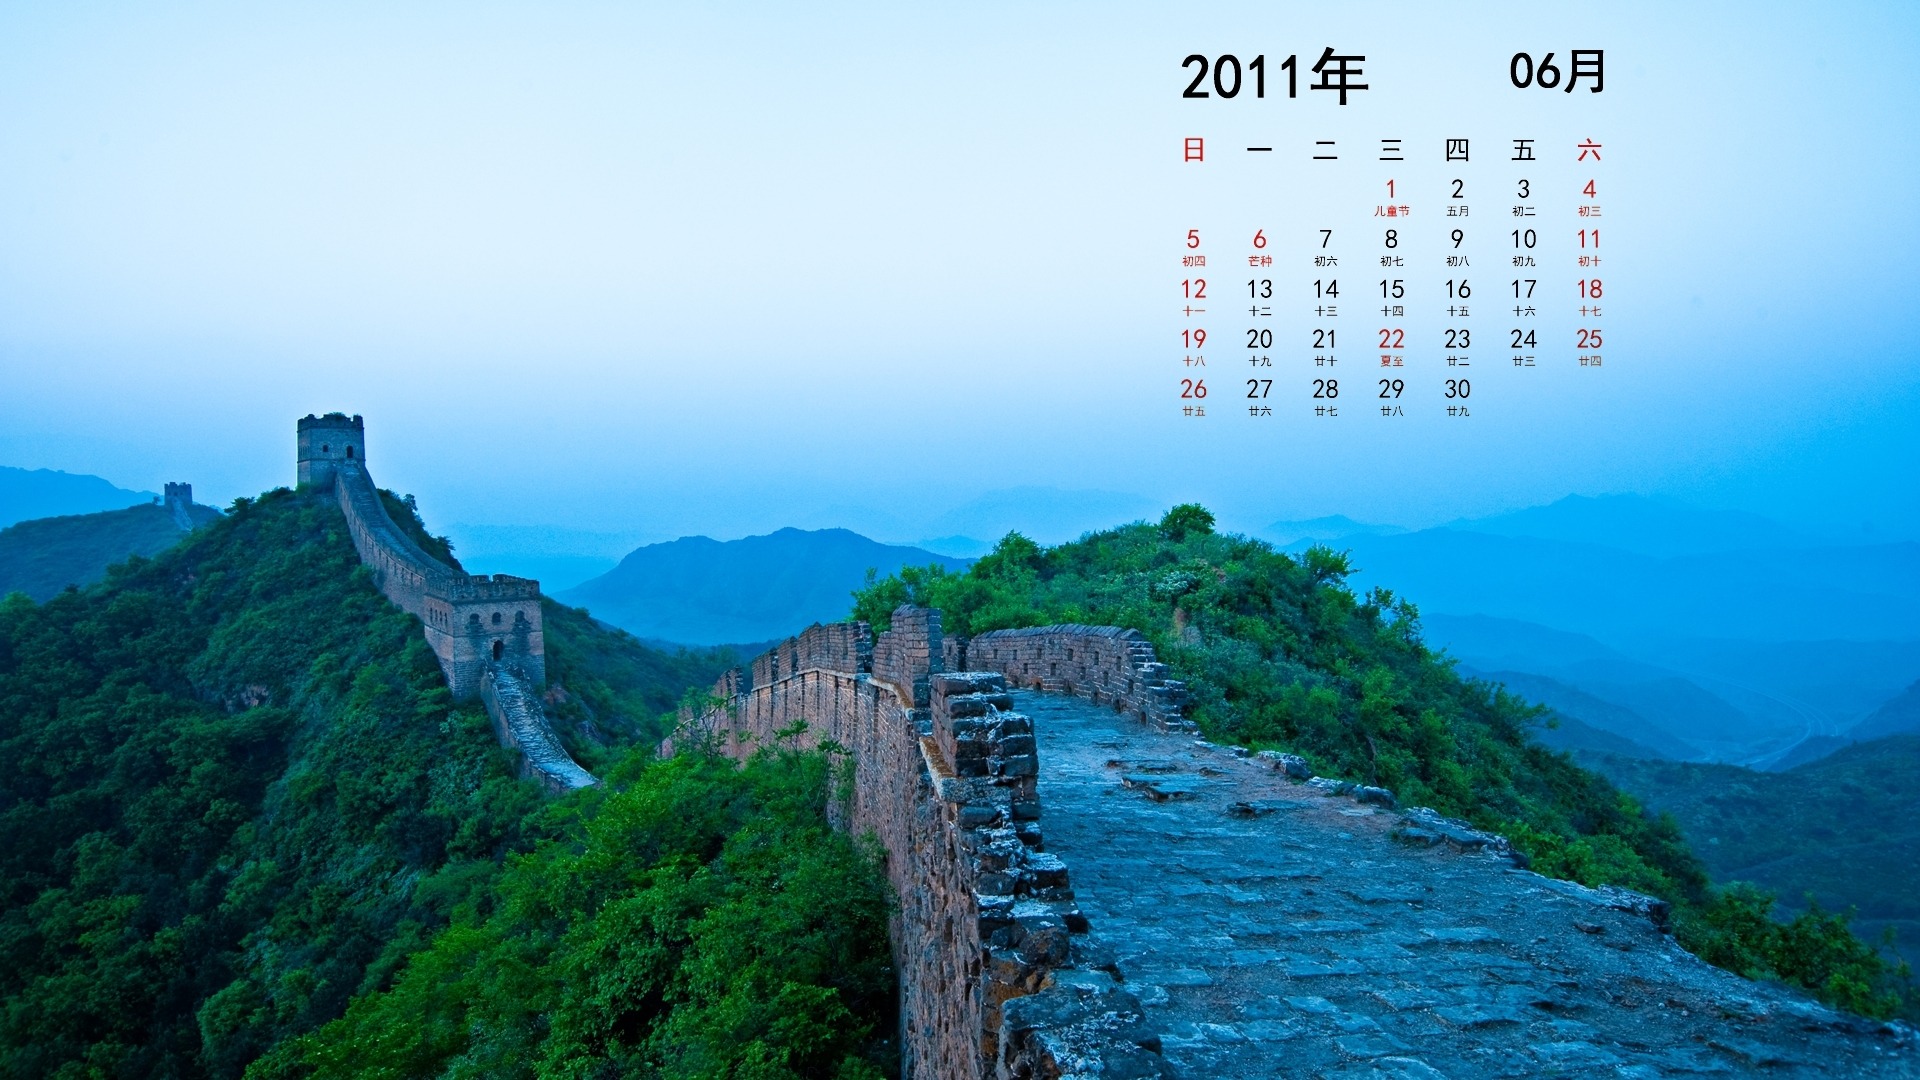 Juni 2011 Kalender Wallpaper (1) #2 - 1920x1080